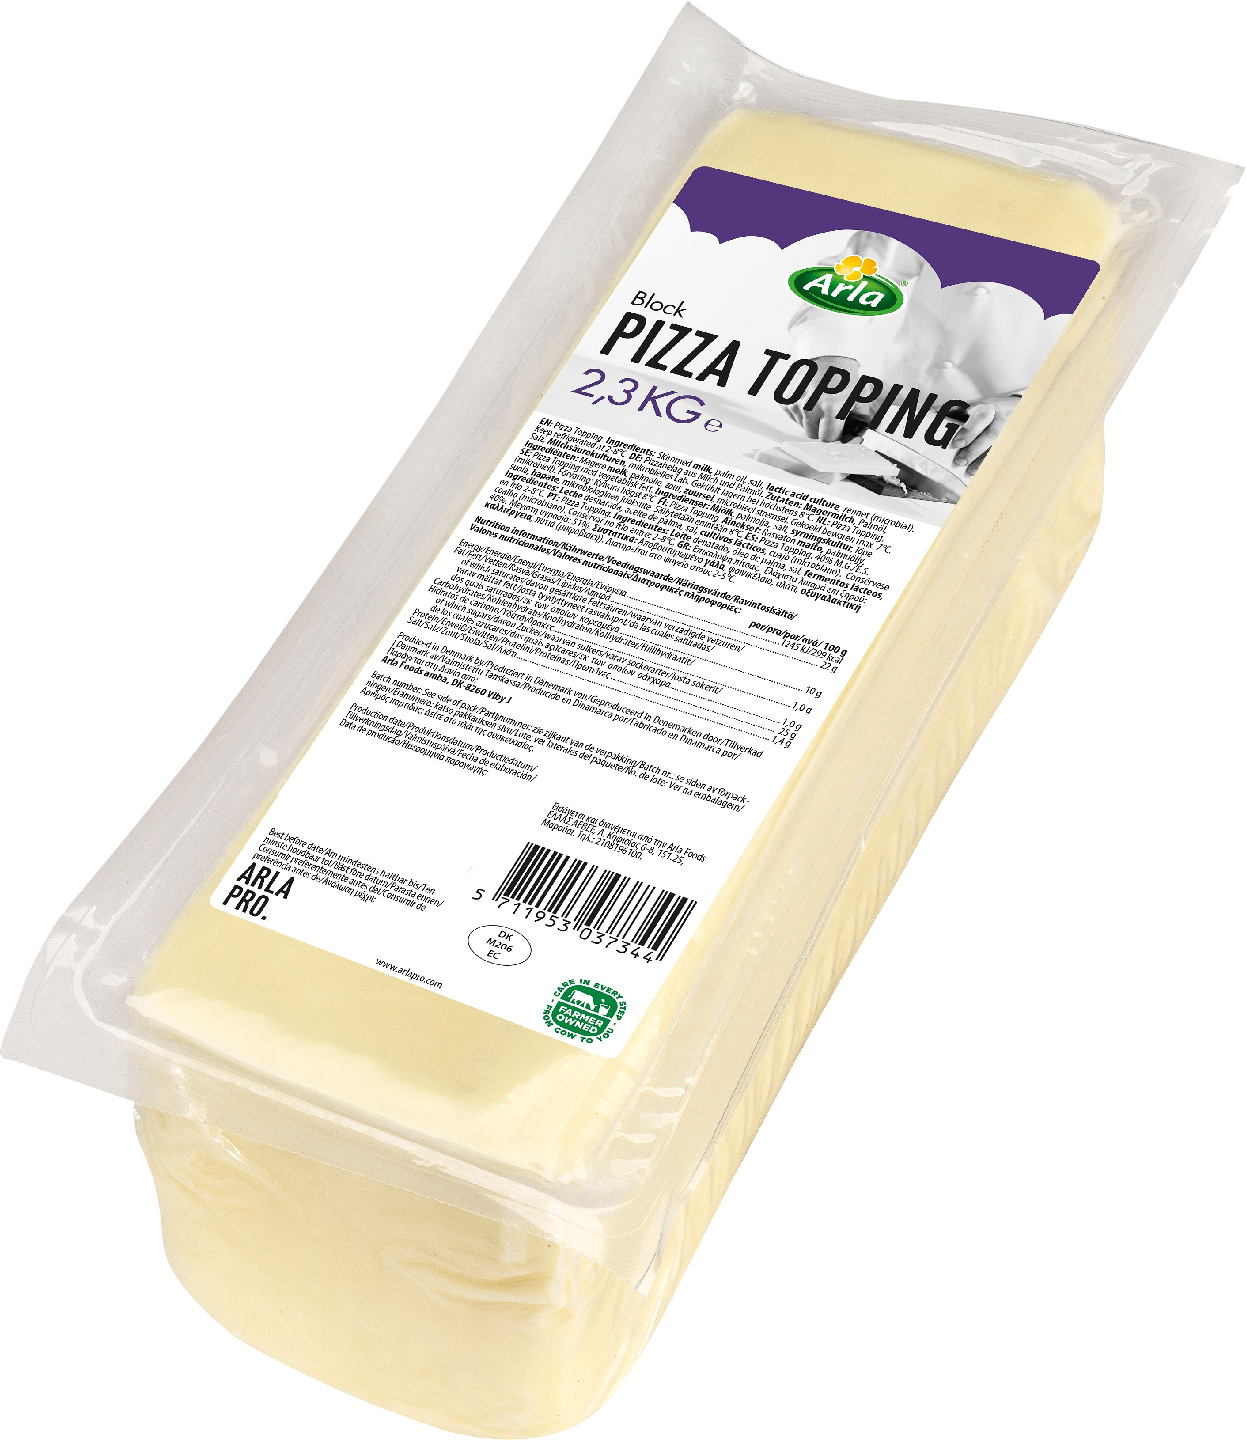 Arla Pro pizzatopping juusto 22% 2,3kg vähälaktoosinen